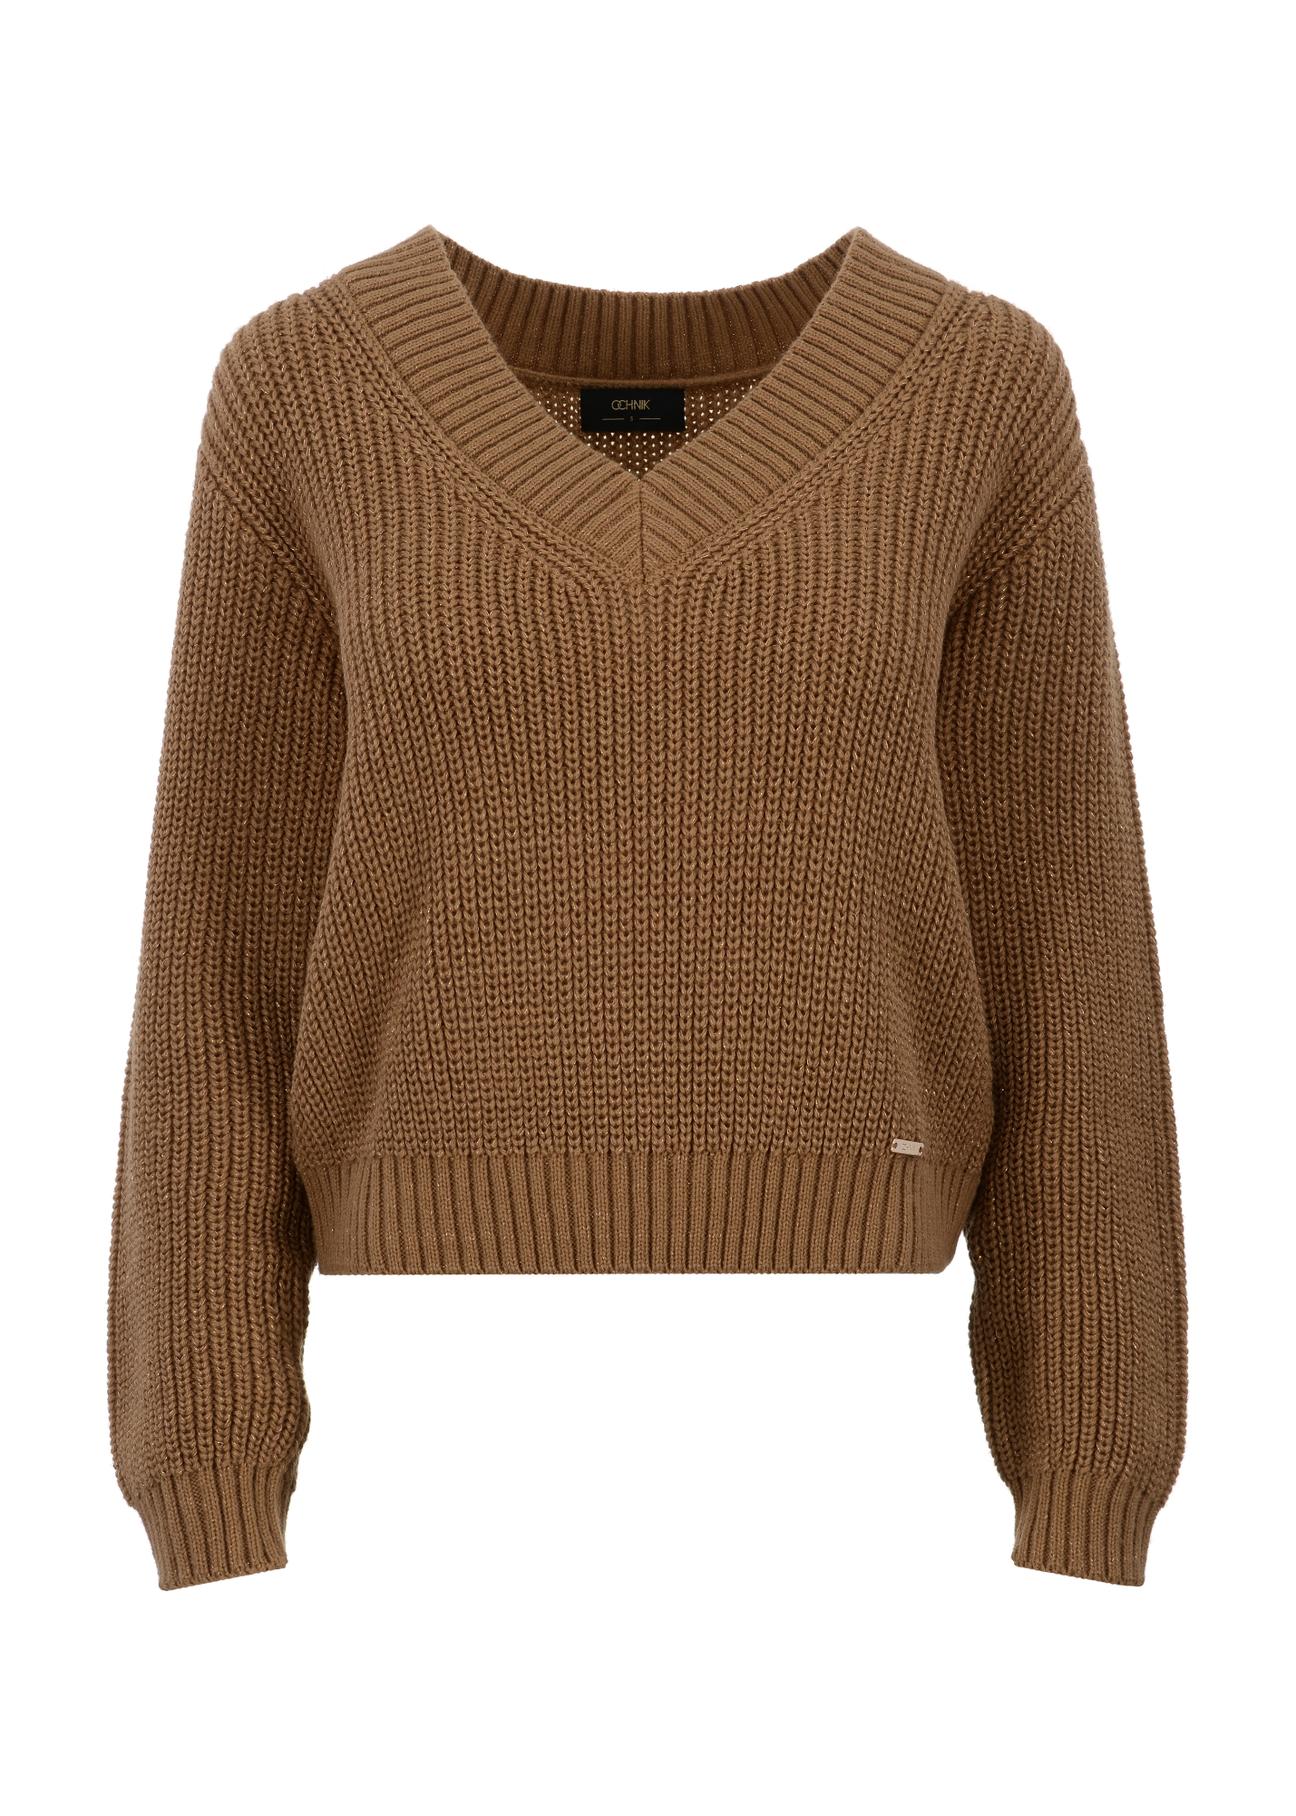 Camelowy sweter dekolt V damski SWEDT-0162-24(Z23)